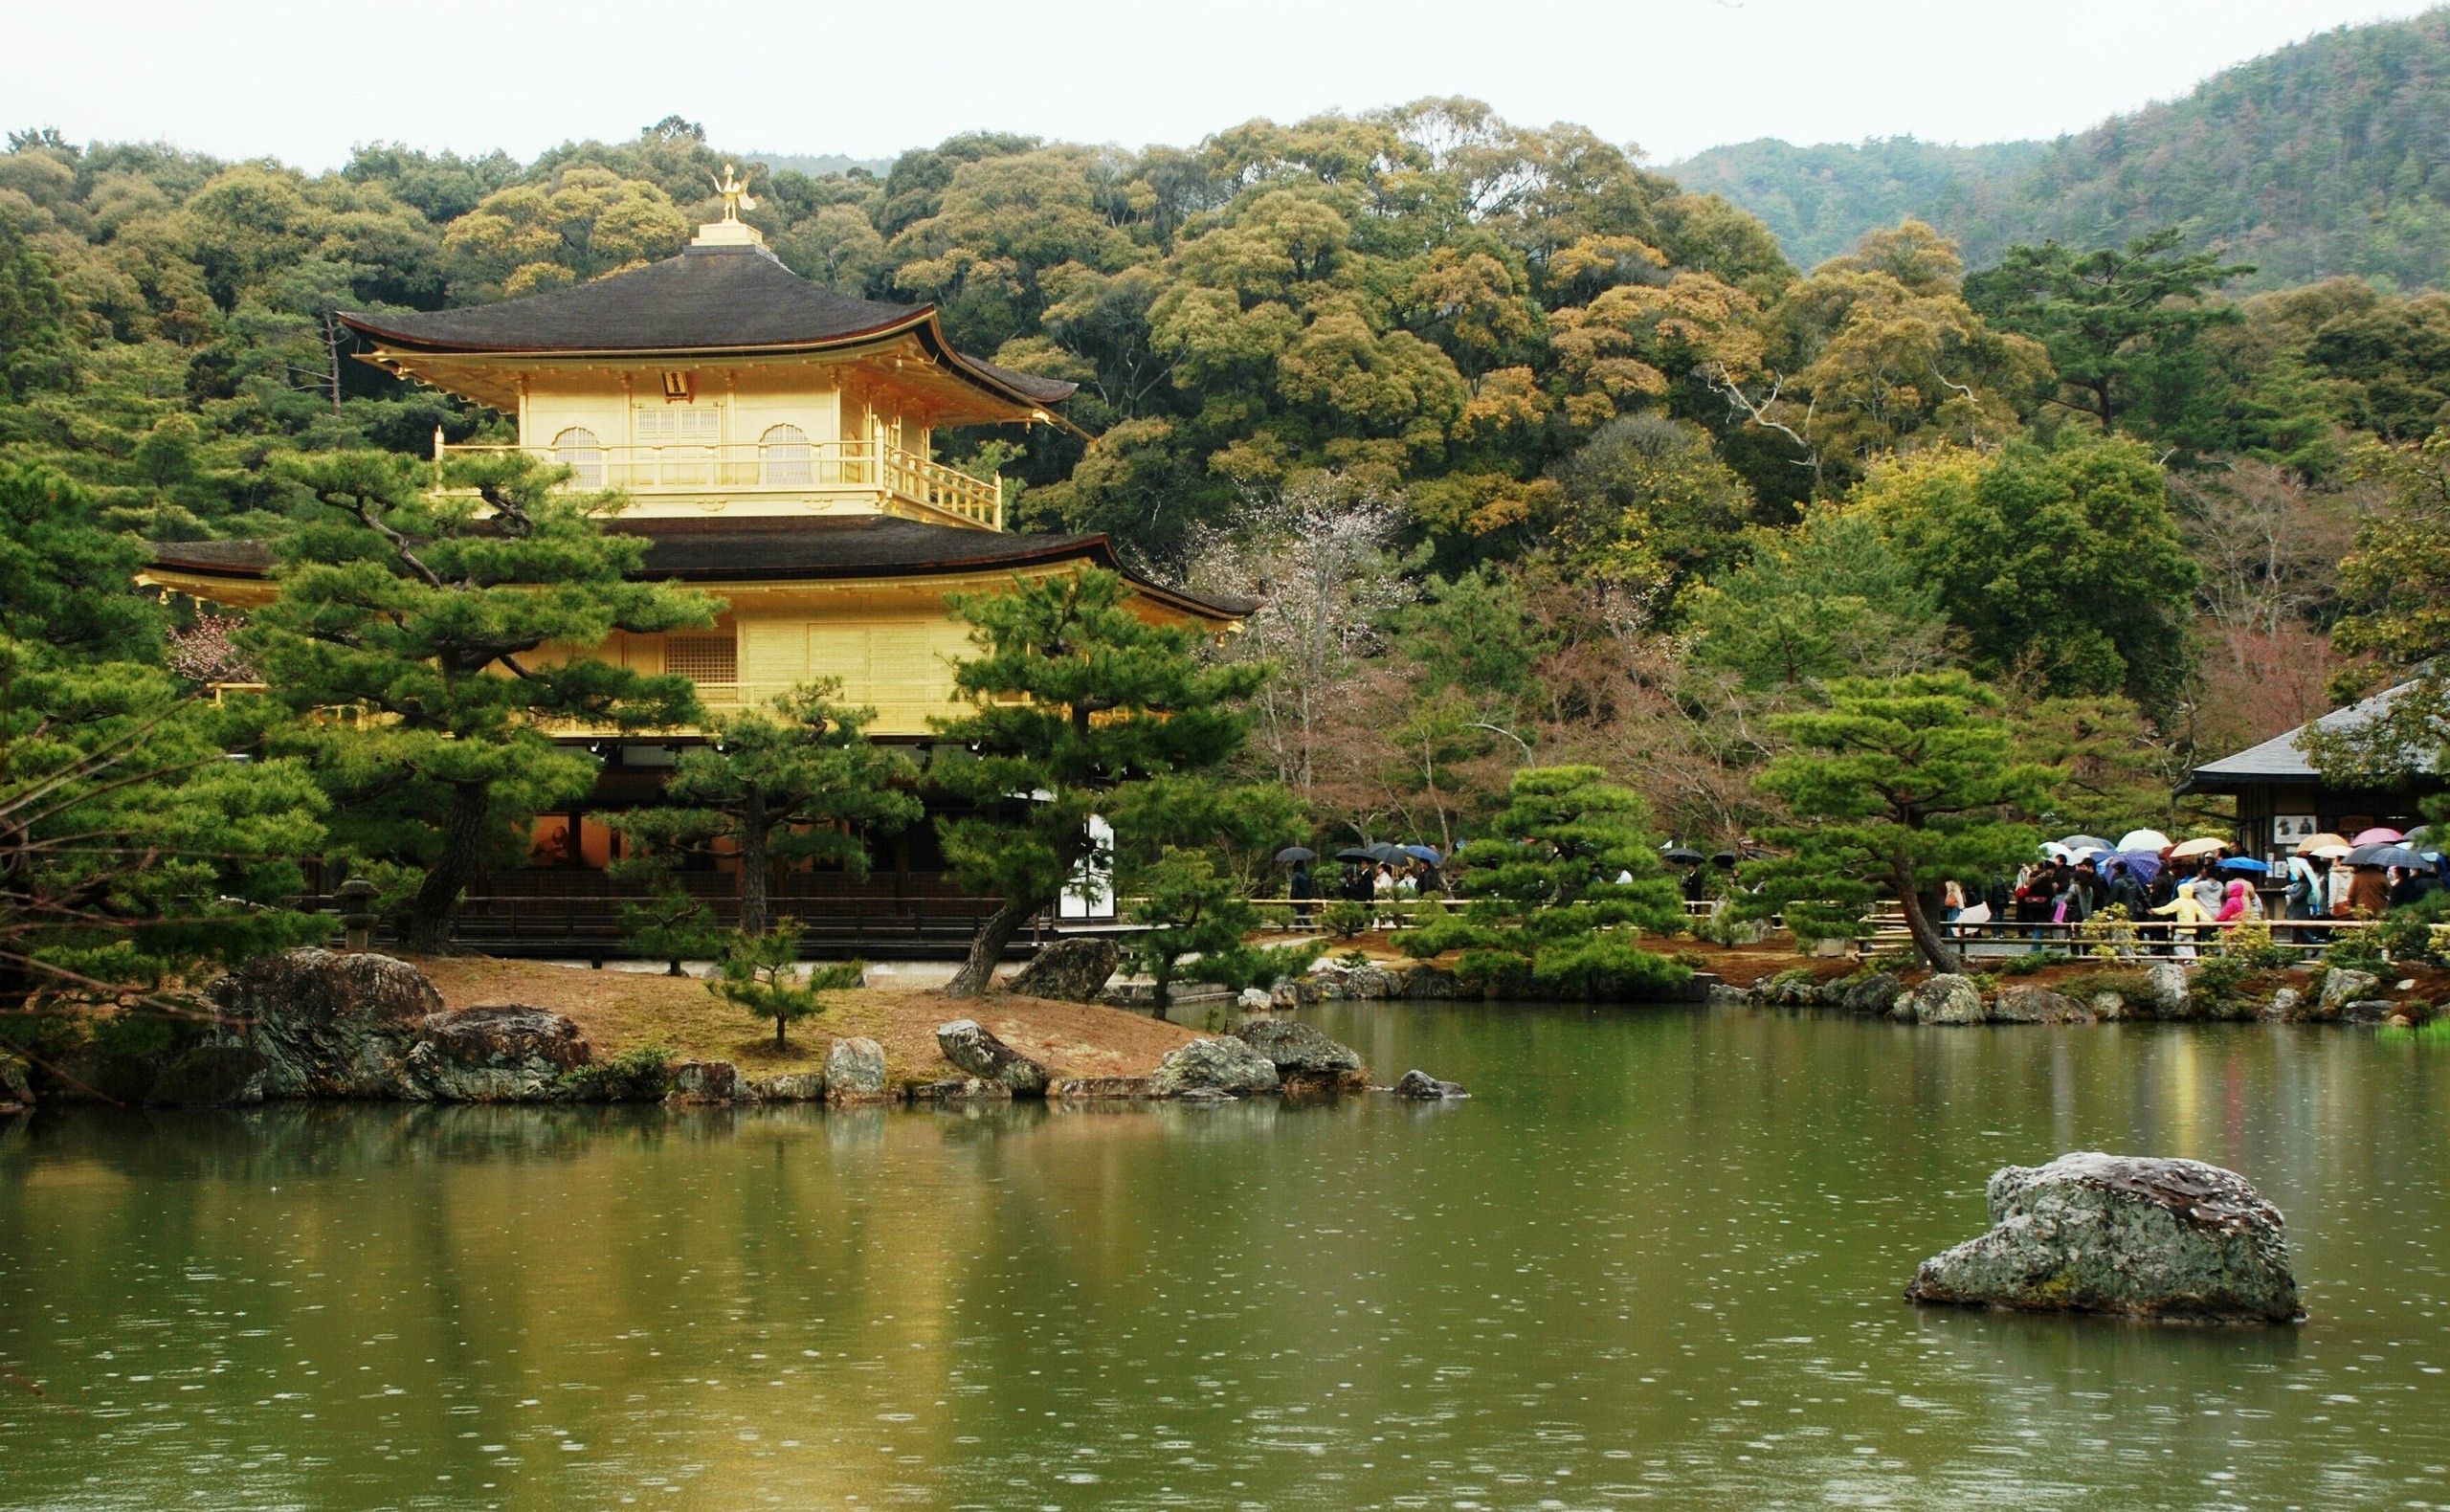 337897 Hintergrundbild herunterladen religiös, kinkaku ji, japan, kyōto, der tempel des goldenen pavillons, tempel - Bildschirmschoner und Bilder kostenlos